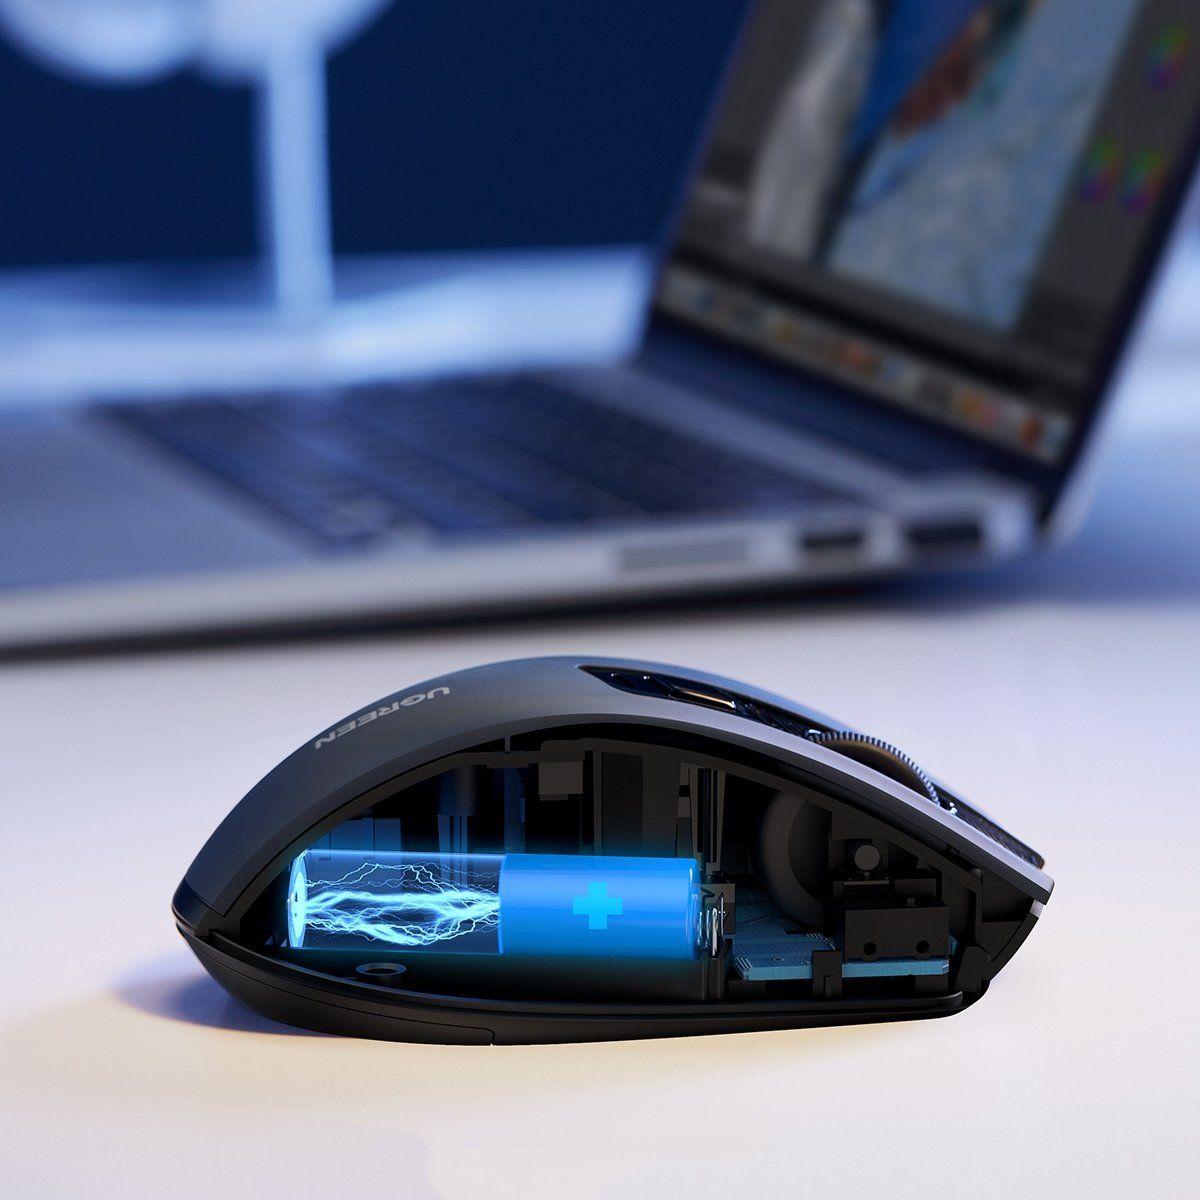 Ugreen USB optical wireless mouse 2.4GHz 4000 DPI black